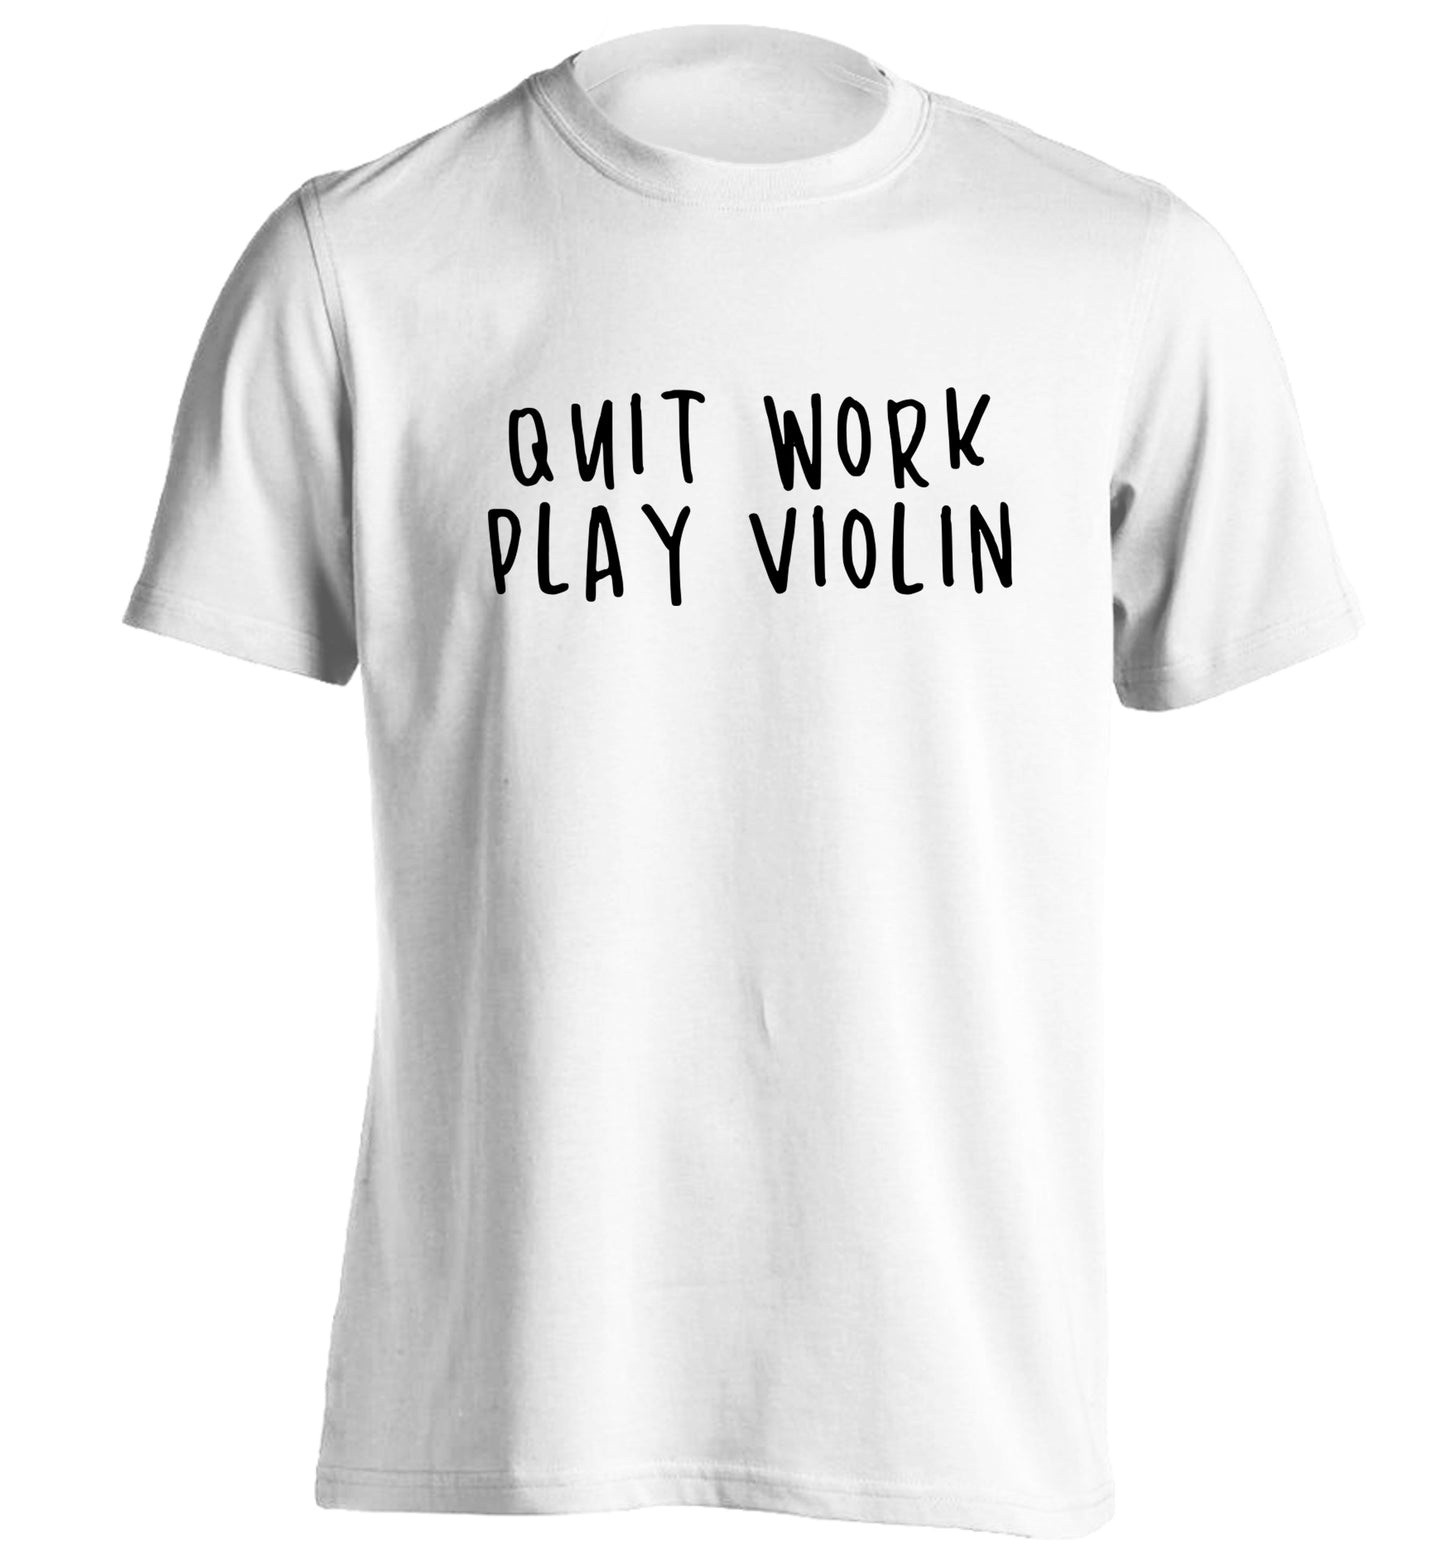 Quit work play violin adults unisex white Tshirt 2XL